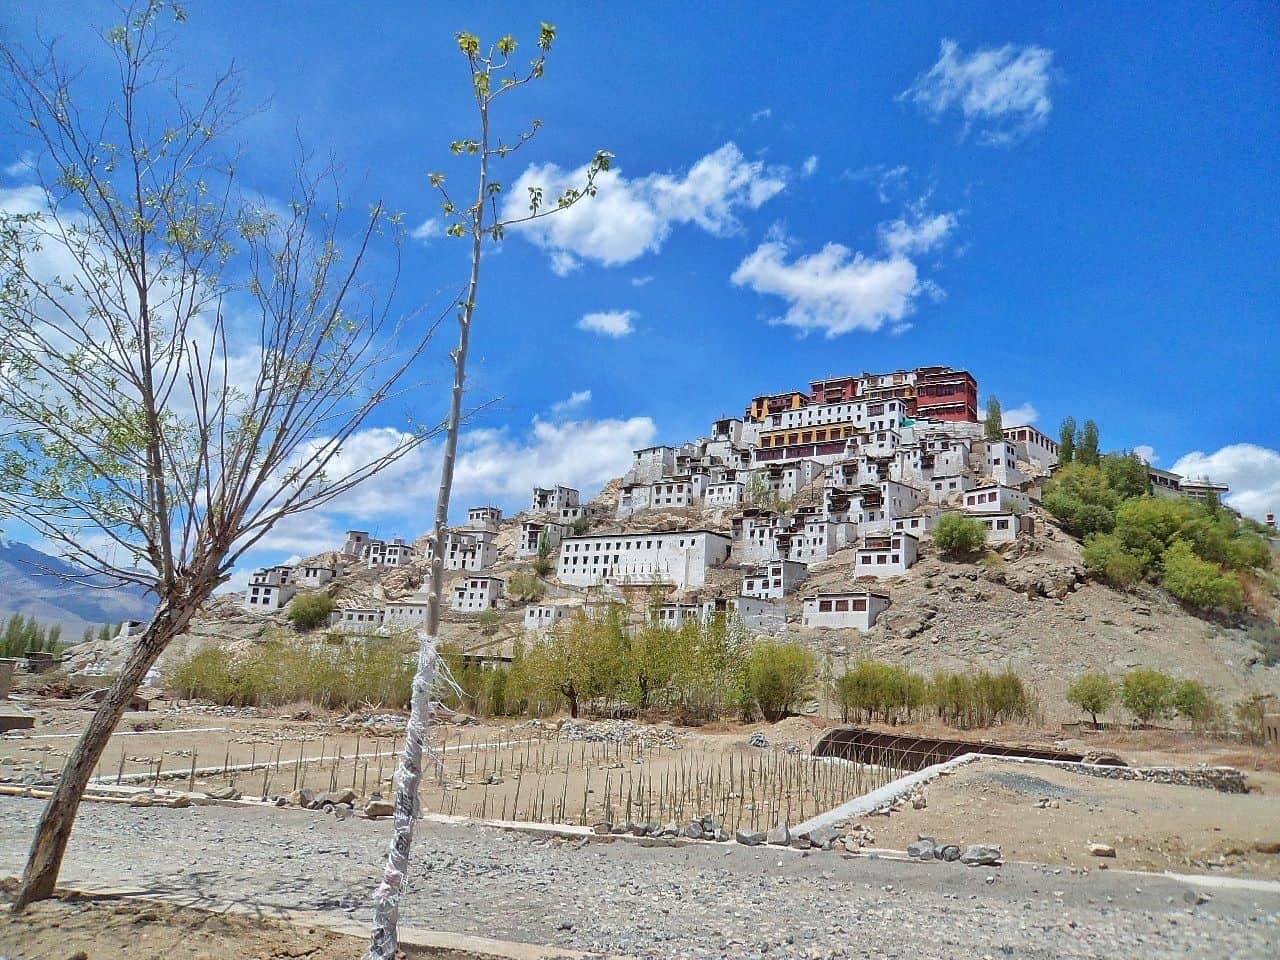 The beautiful monasteries of Ladakh